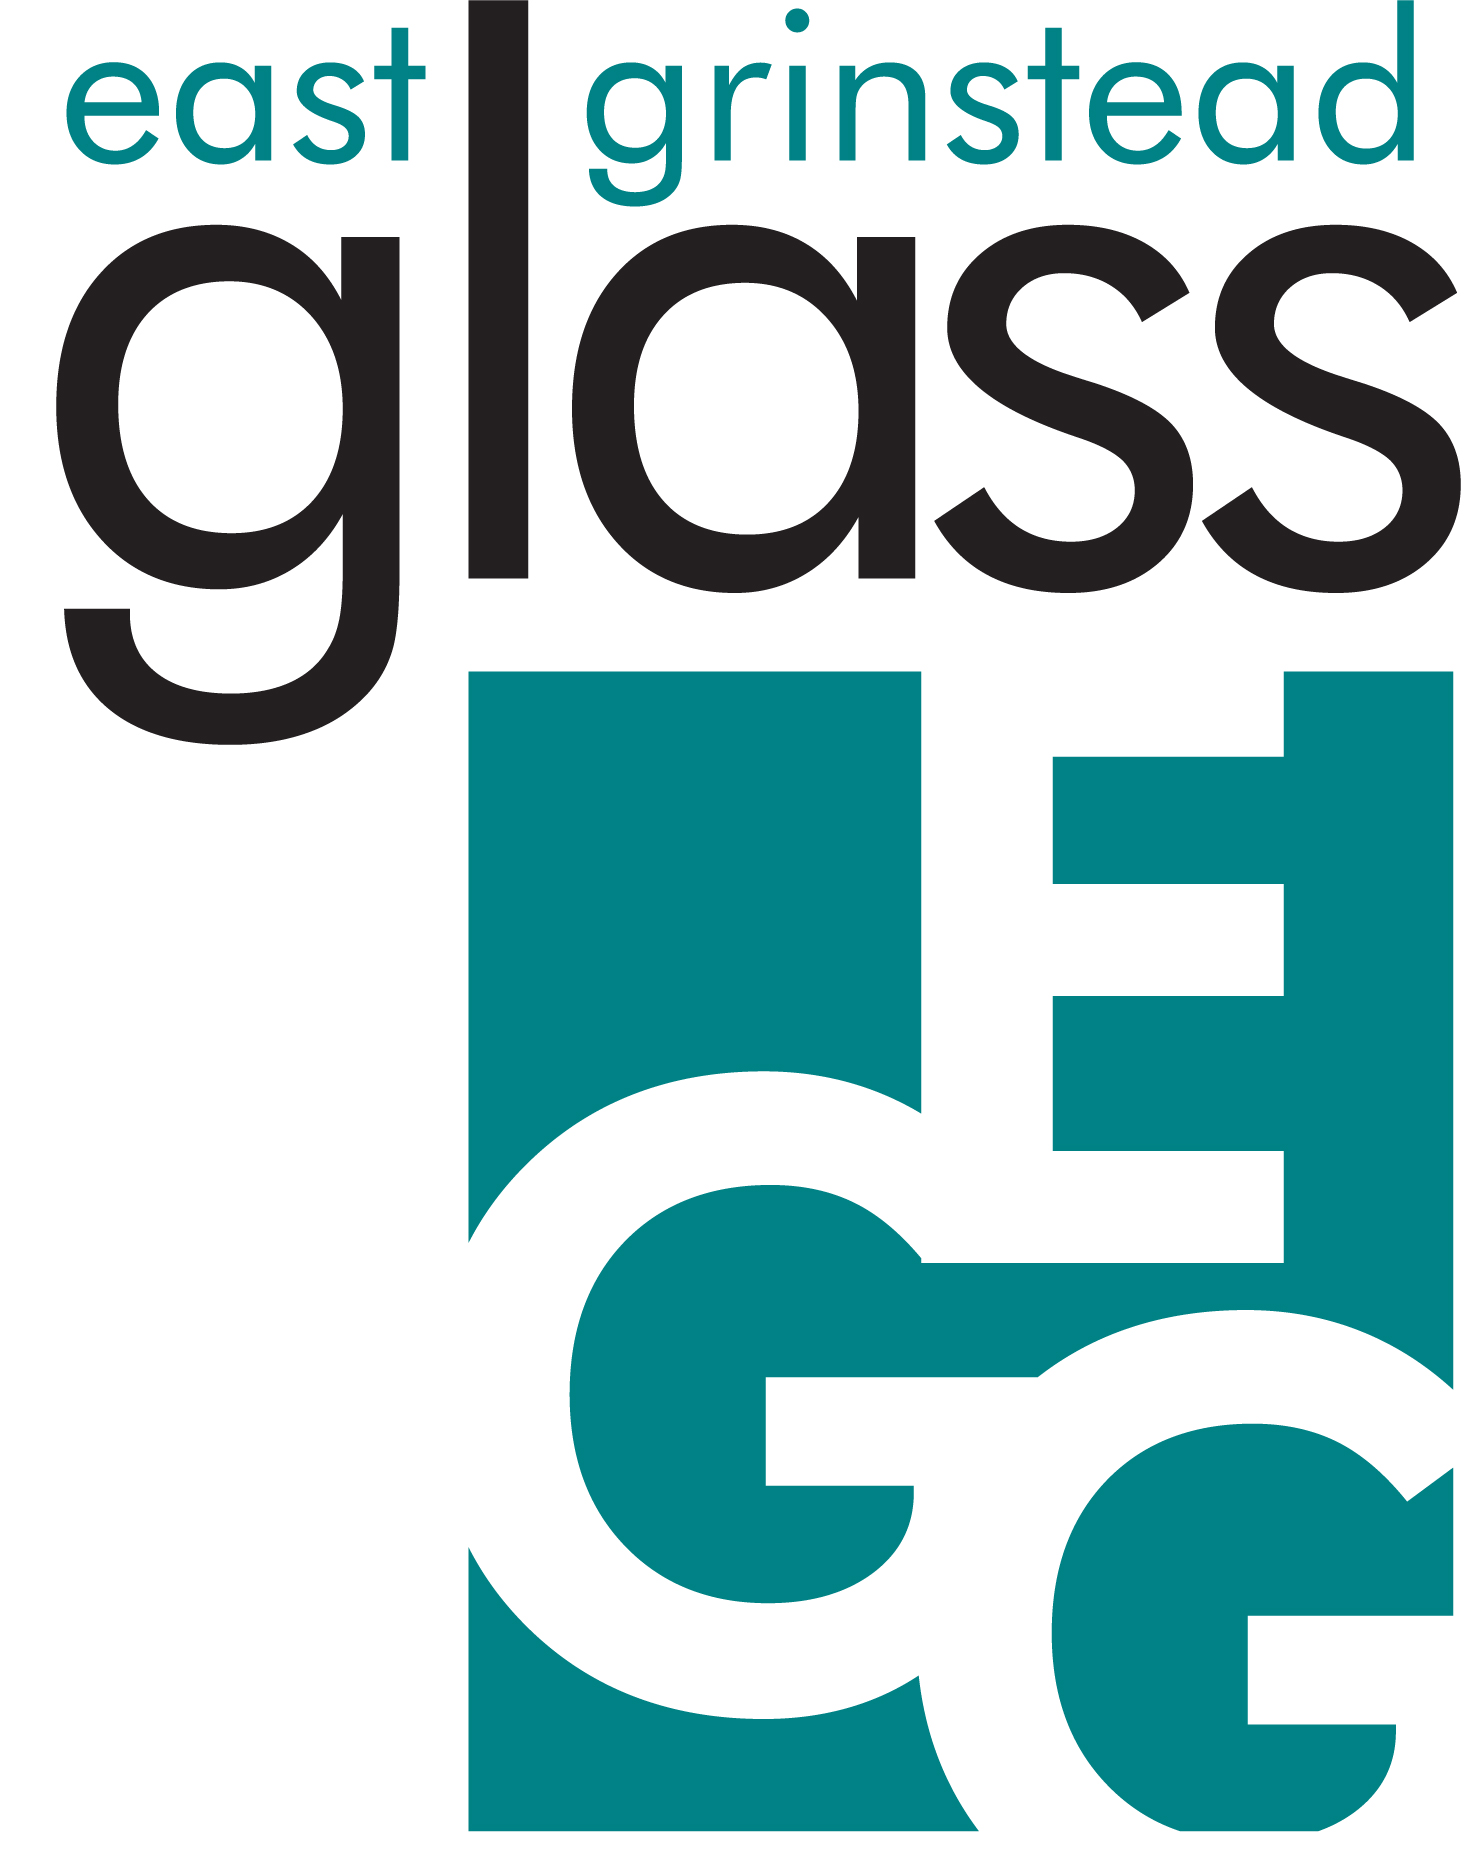 East Grinstead Glass logo